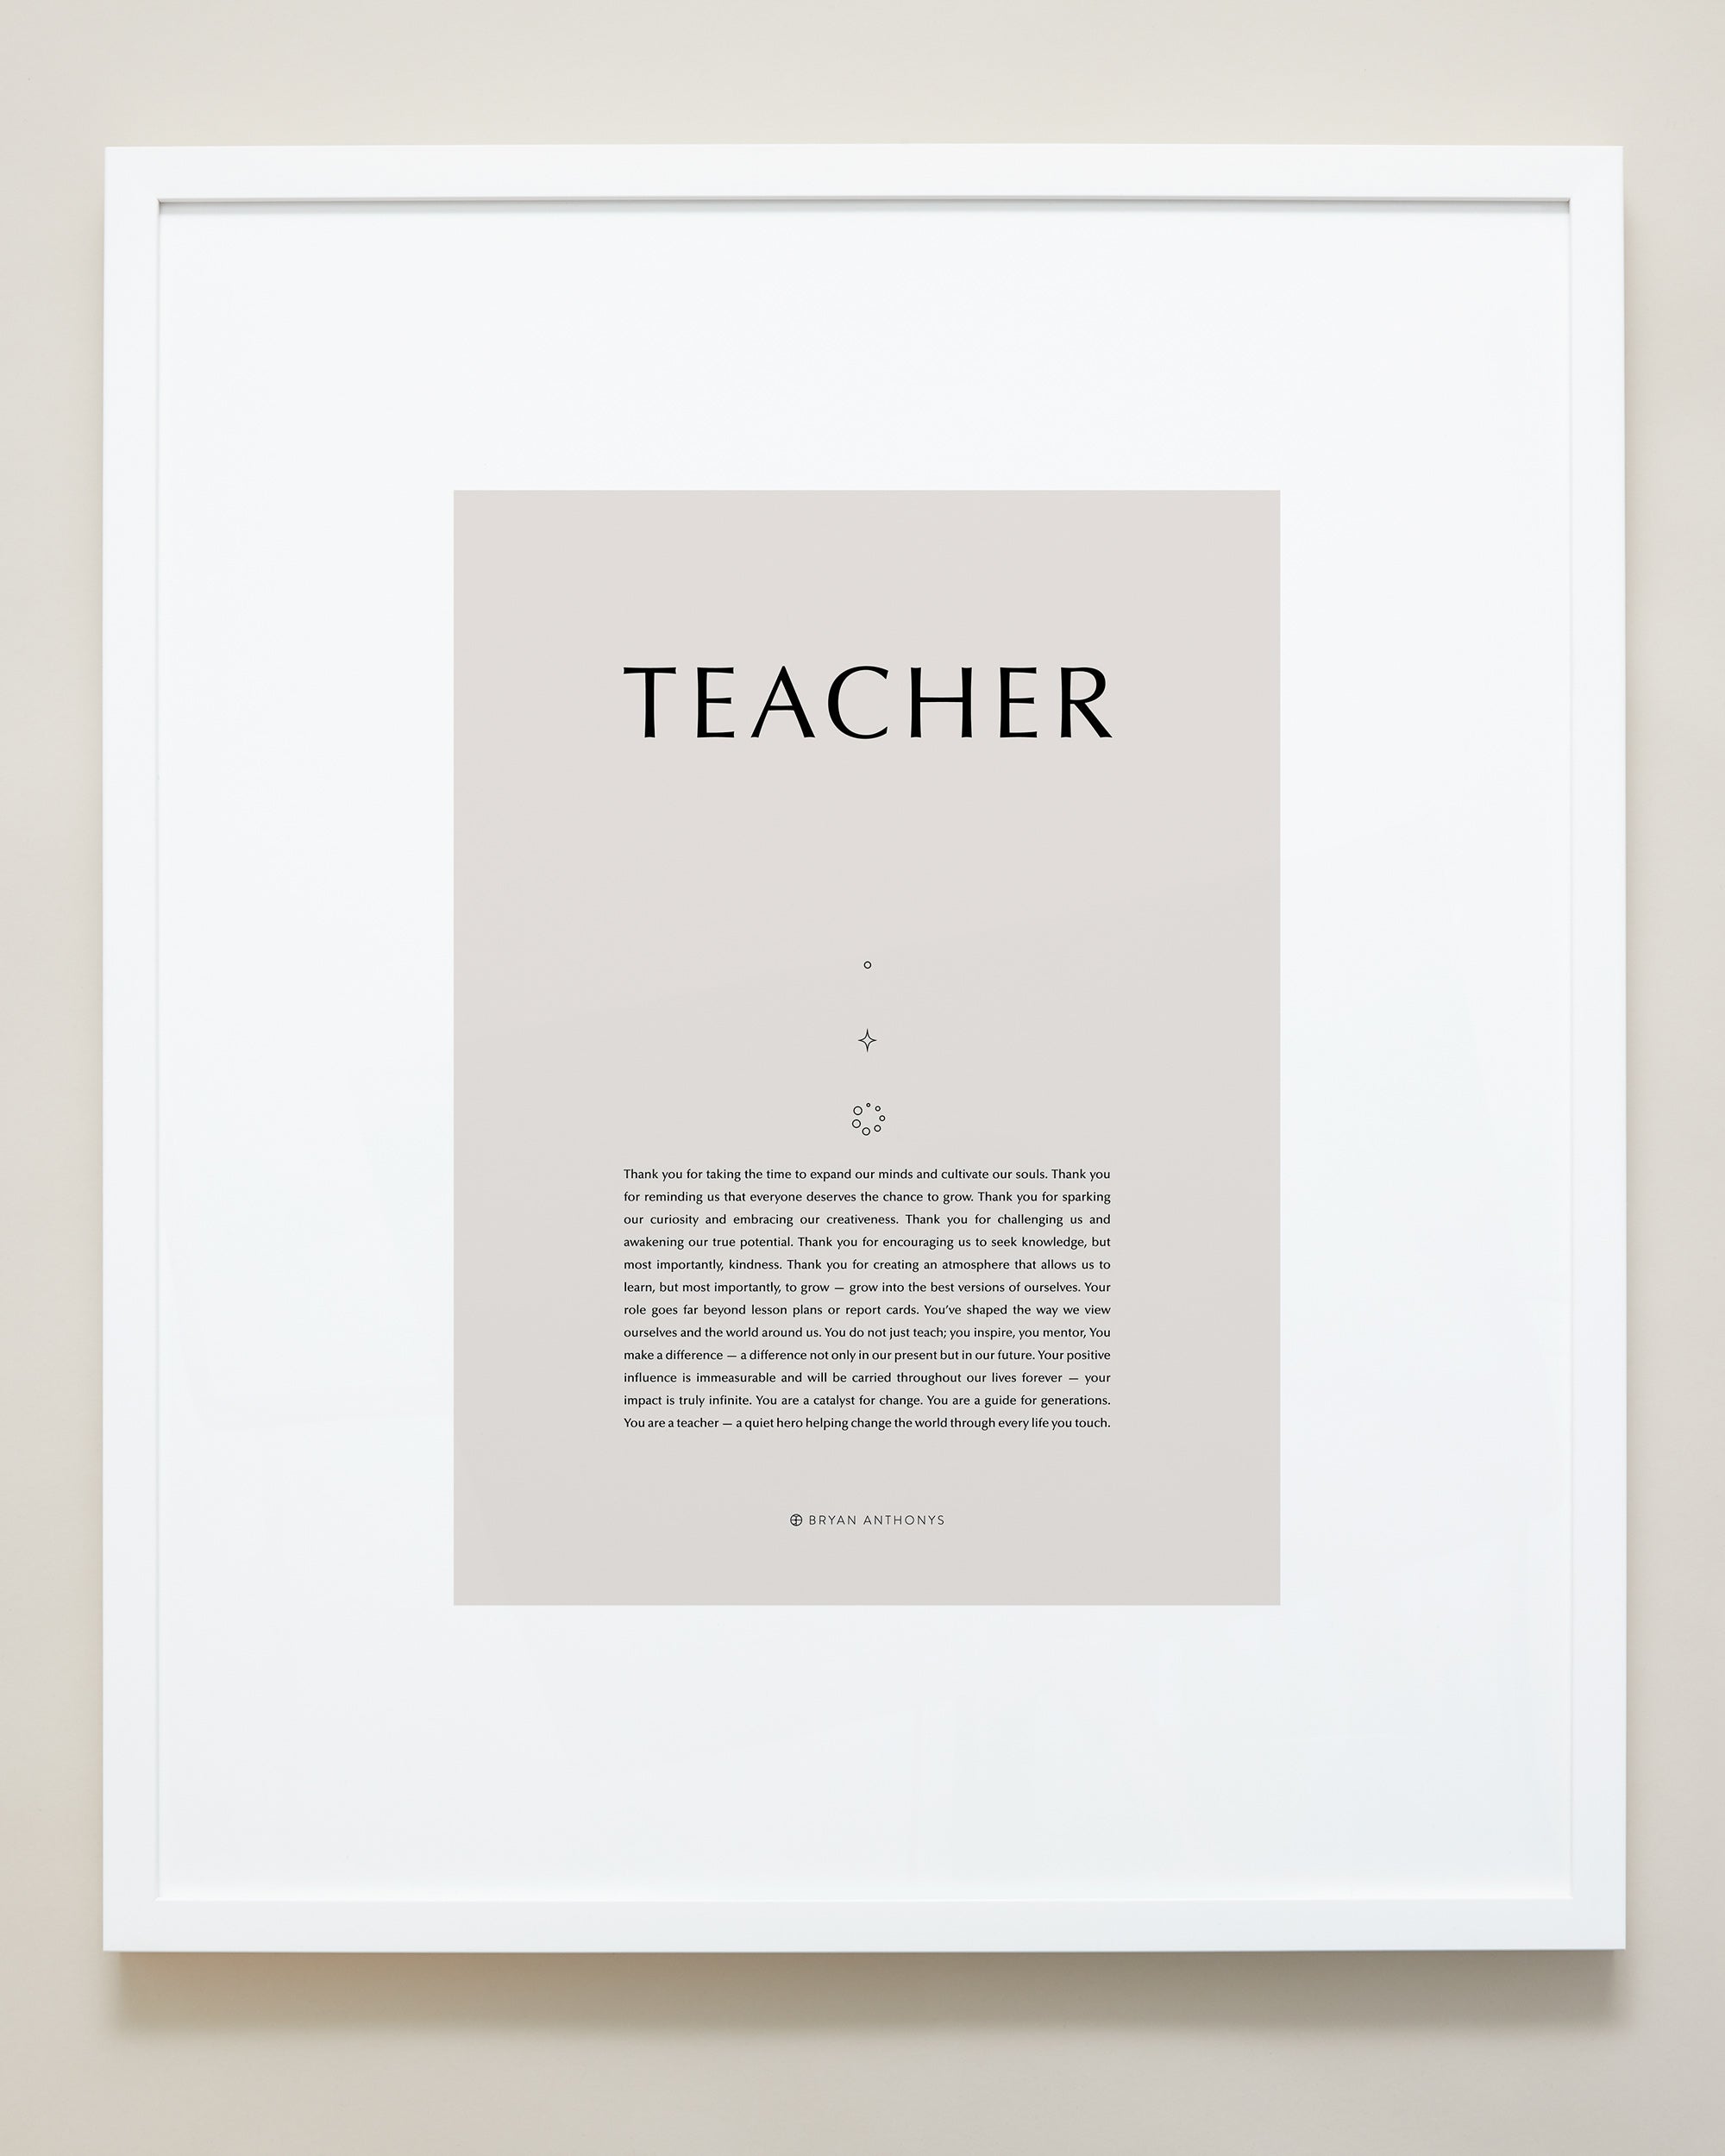 Bryan Anthonys Home Decor Purposeful Prints Teacher Iconic Framed Print Tan Art with White Frame 20x24